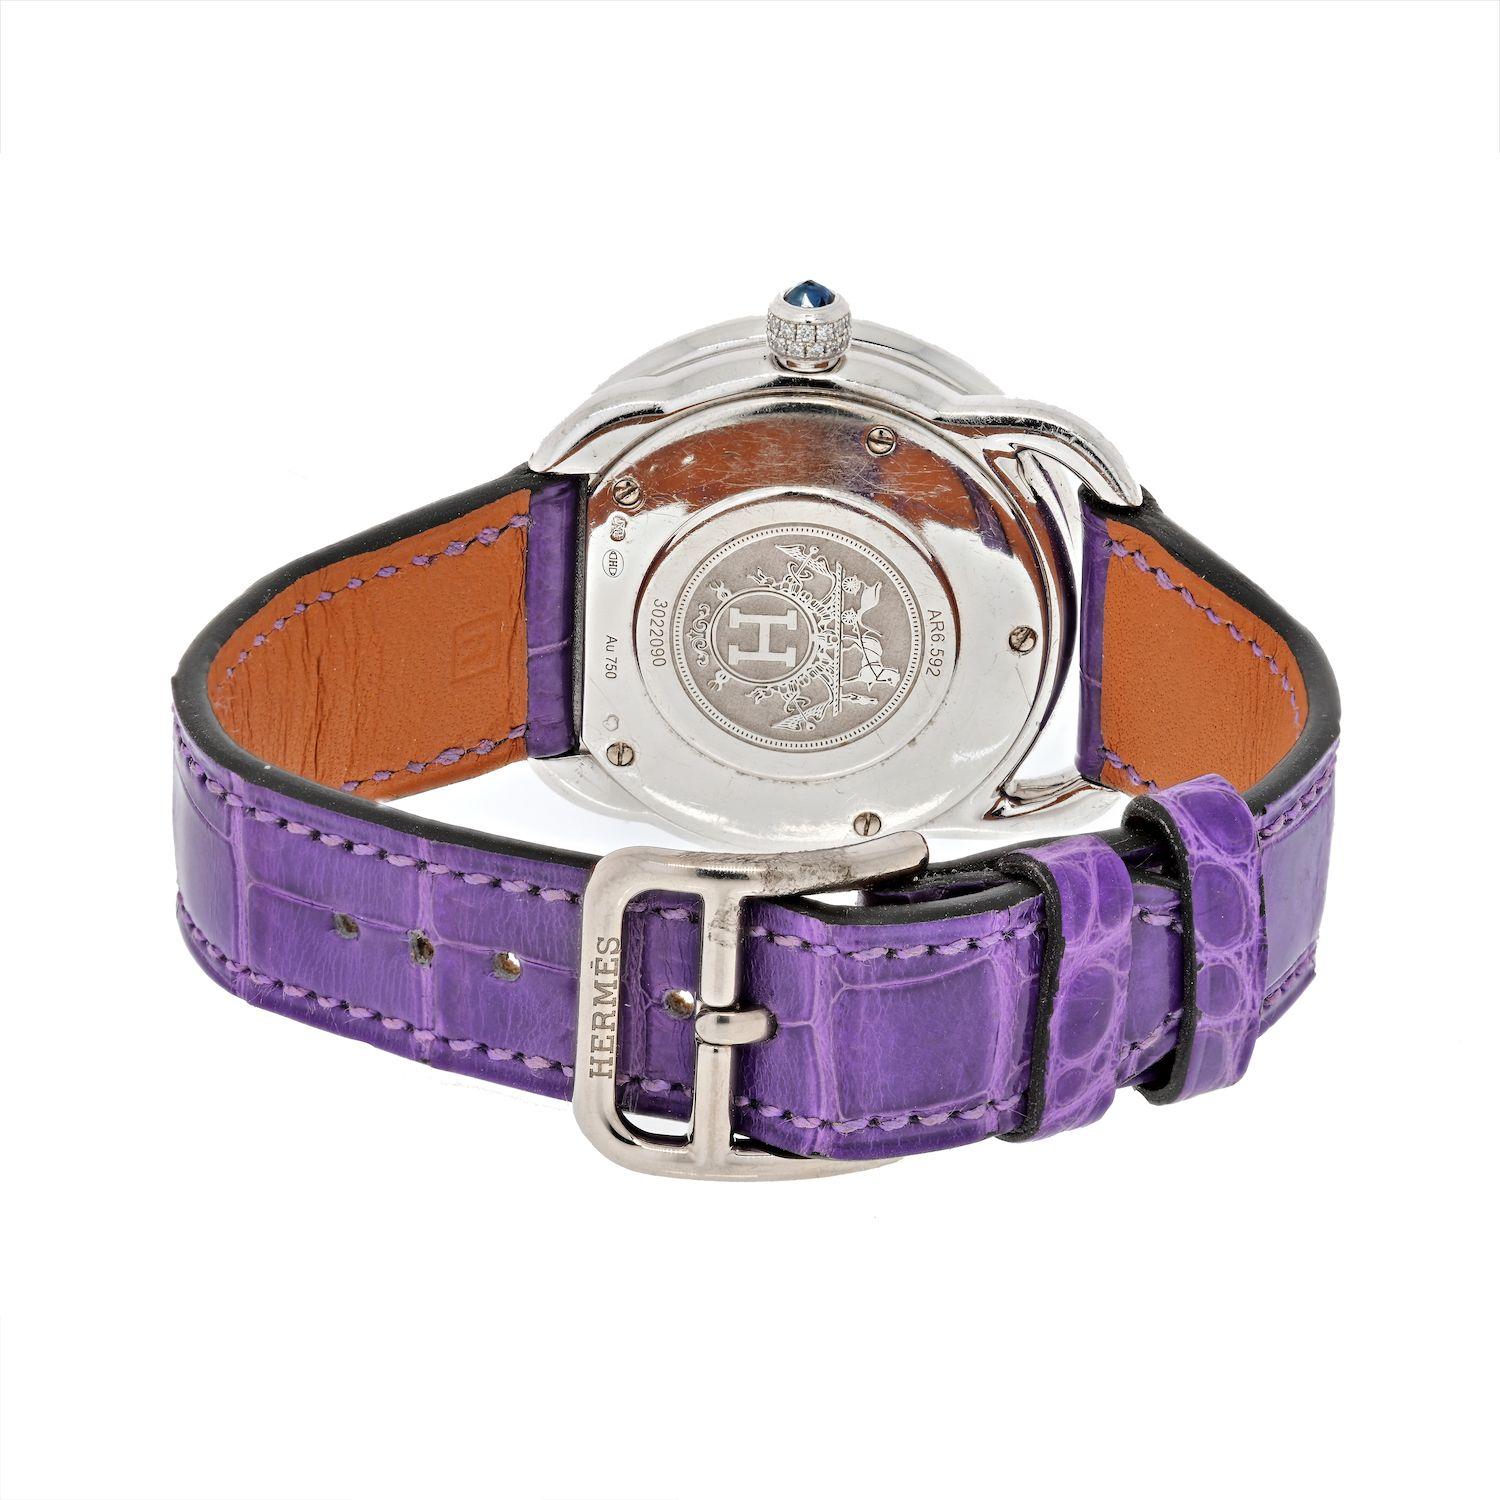 Luxurious Hermes 18K White Gold 32mm Diamond Arceau Purple Alligator Watch. Fully diamond dial and bezel. Back case adorned with Hermes logo.
REF # AR6.592